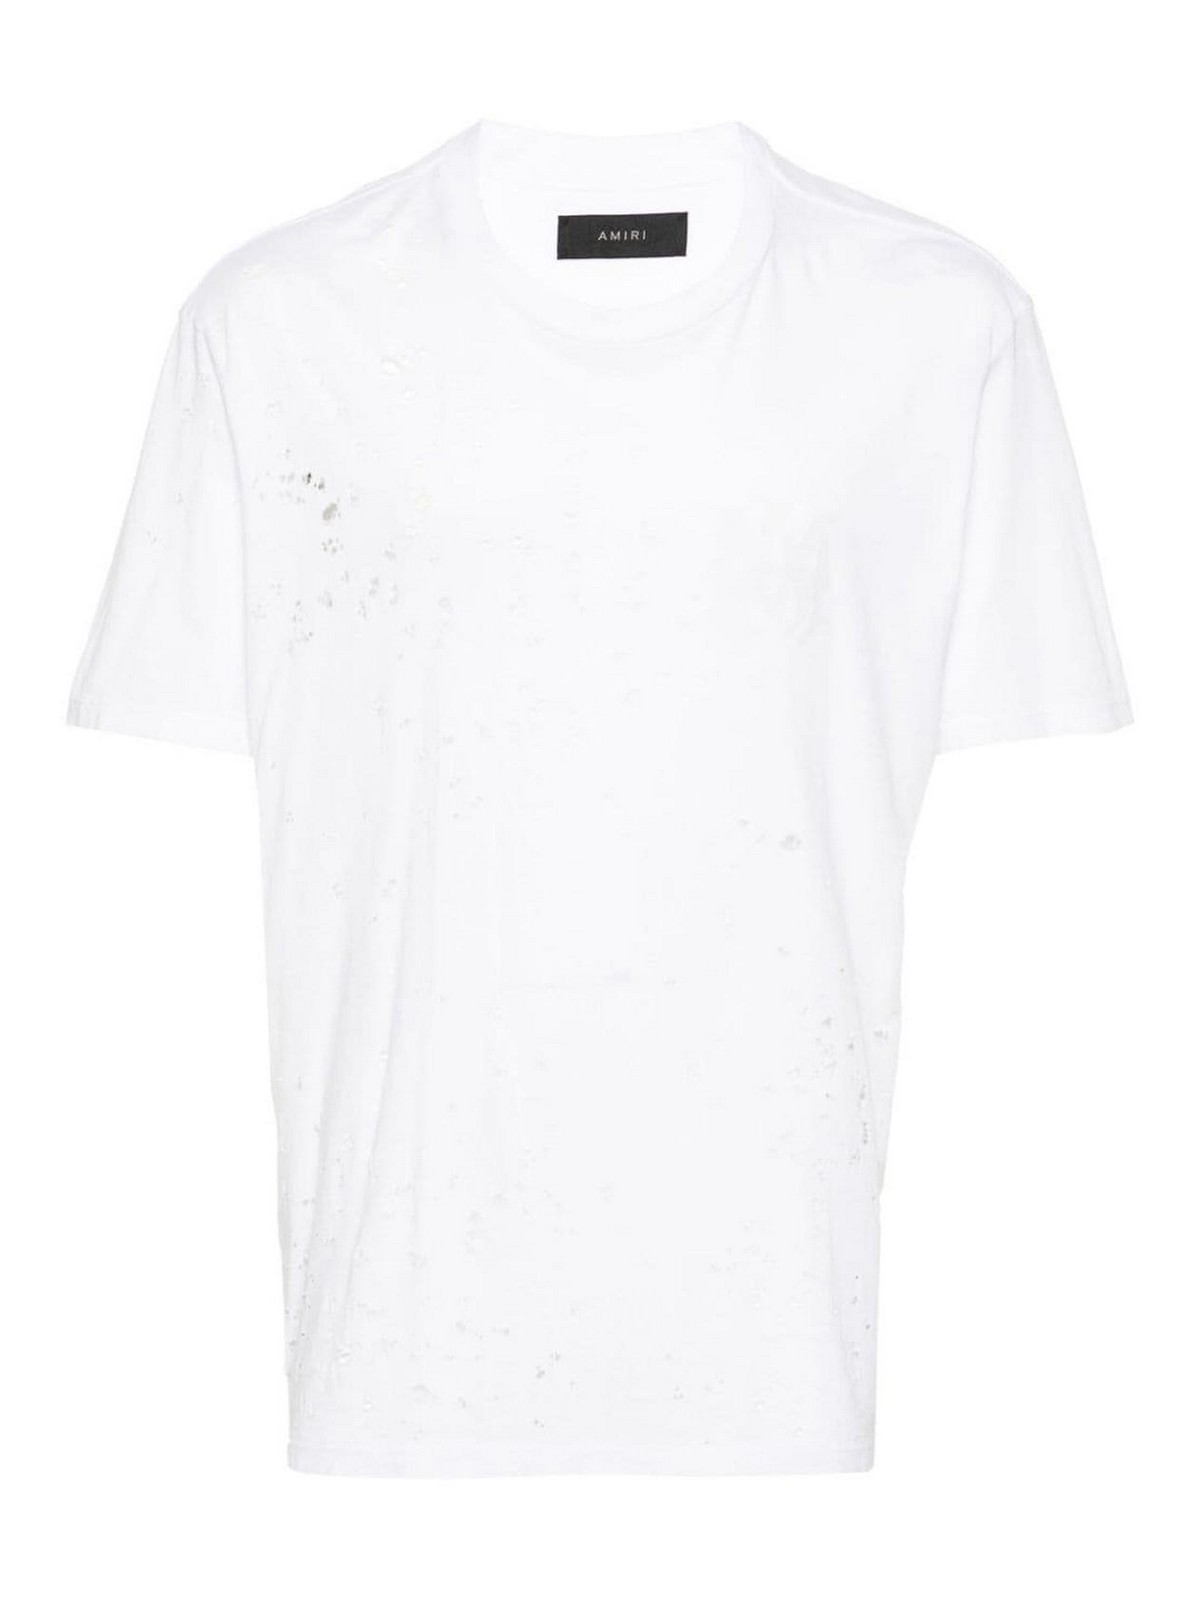 Amiri Distressed Effect T-shirt In White